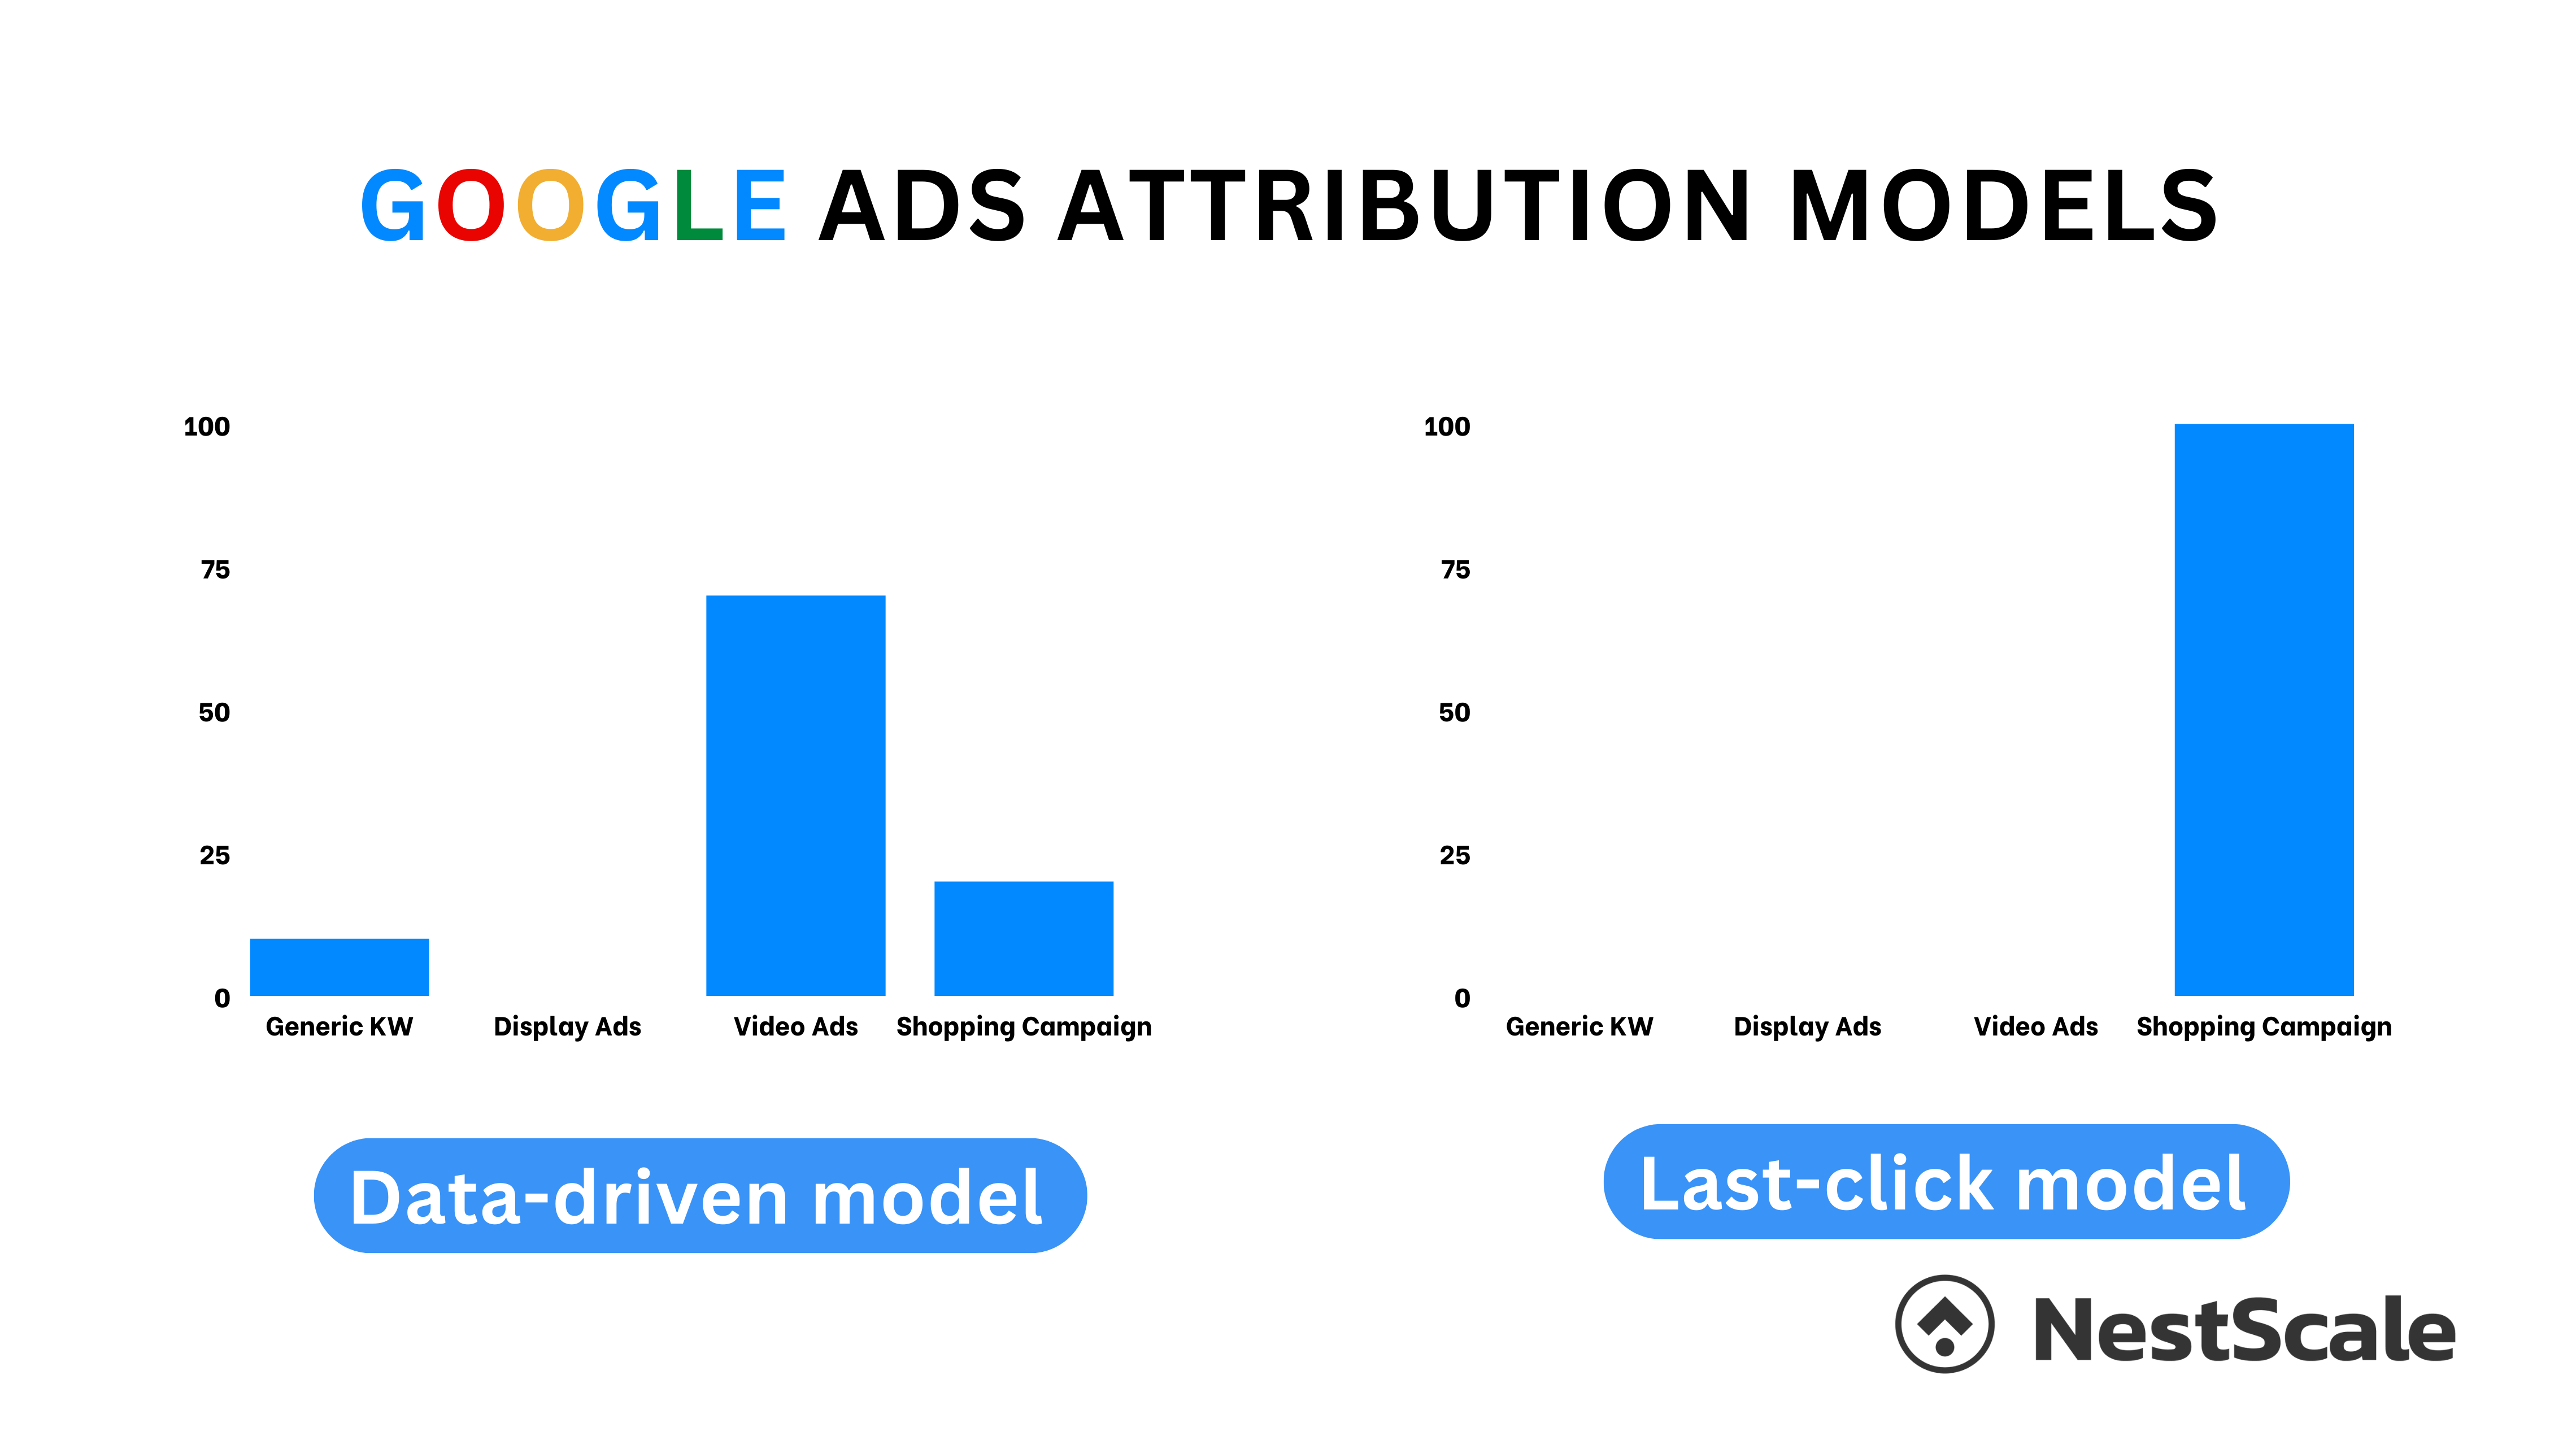 Google ads attribution models